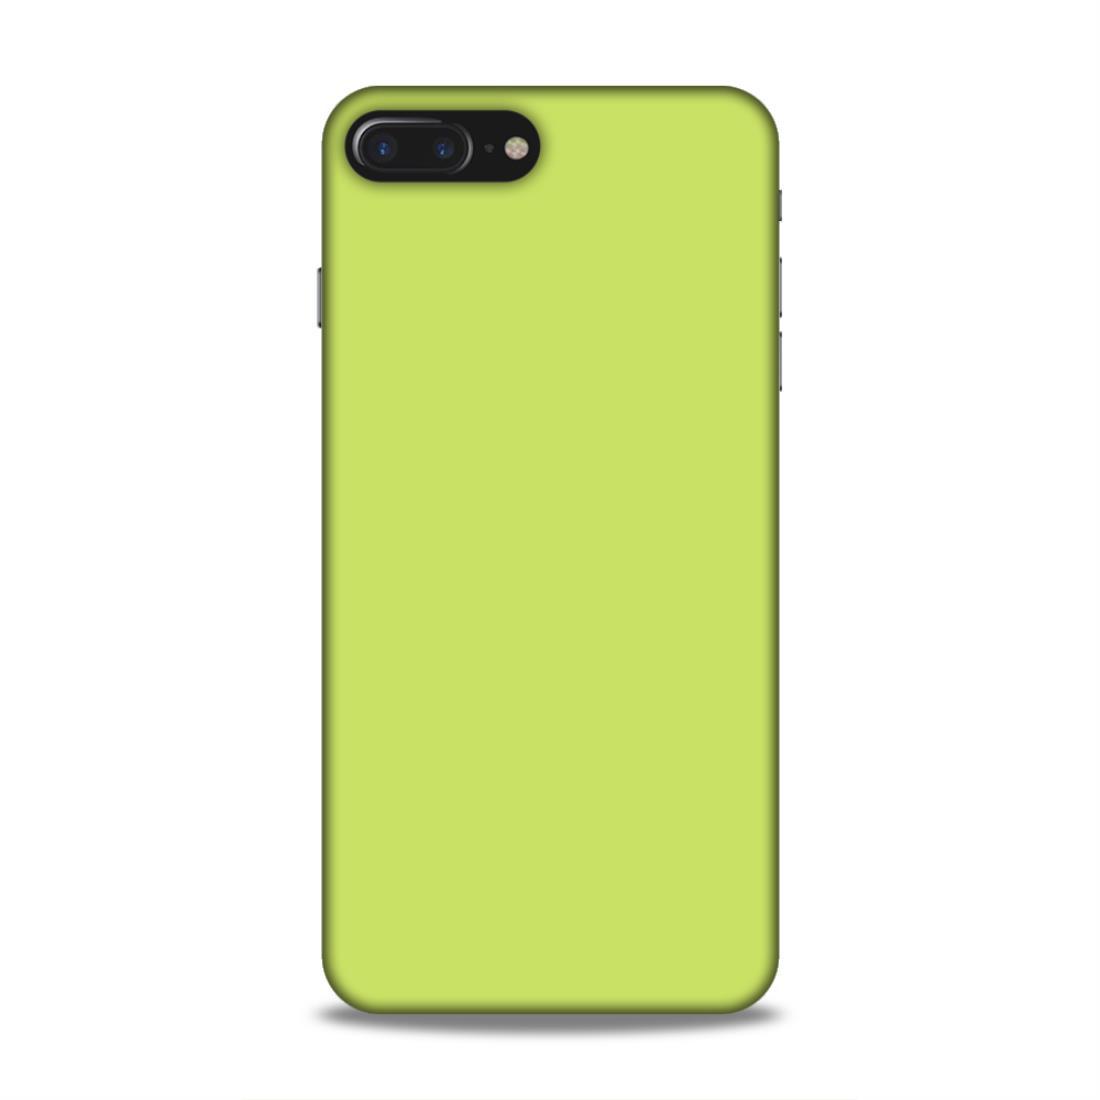 Lime Classic Plain iPhone 8 Plus Phone Cover Case